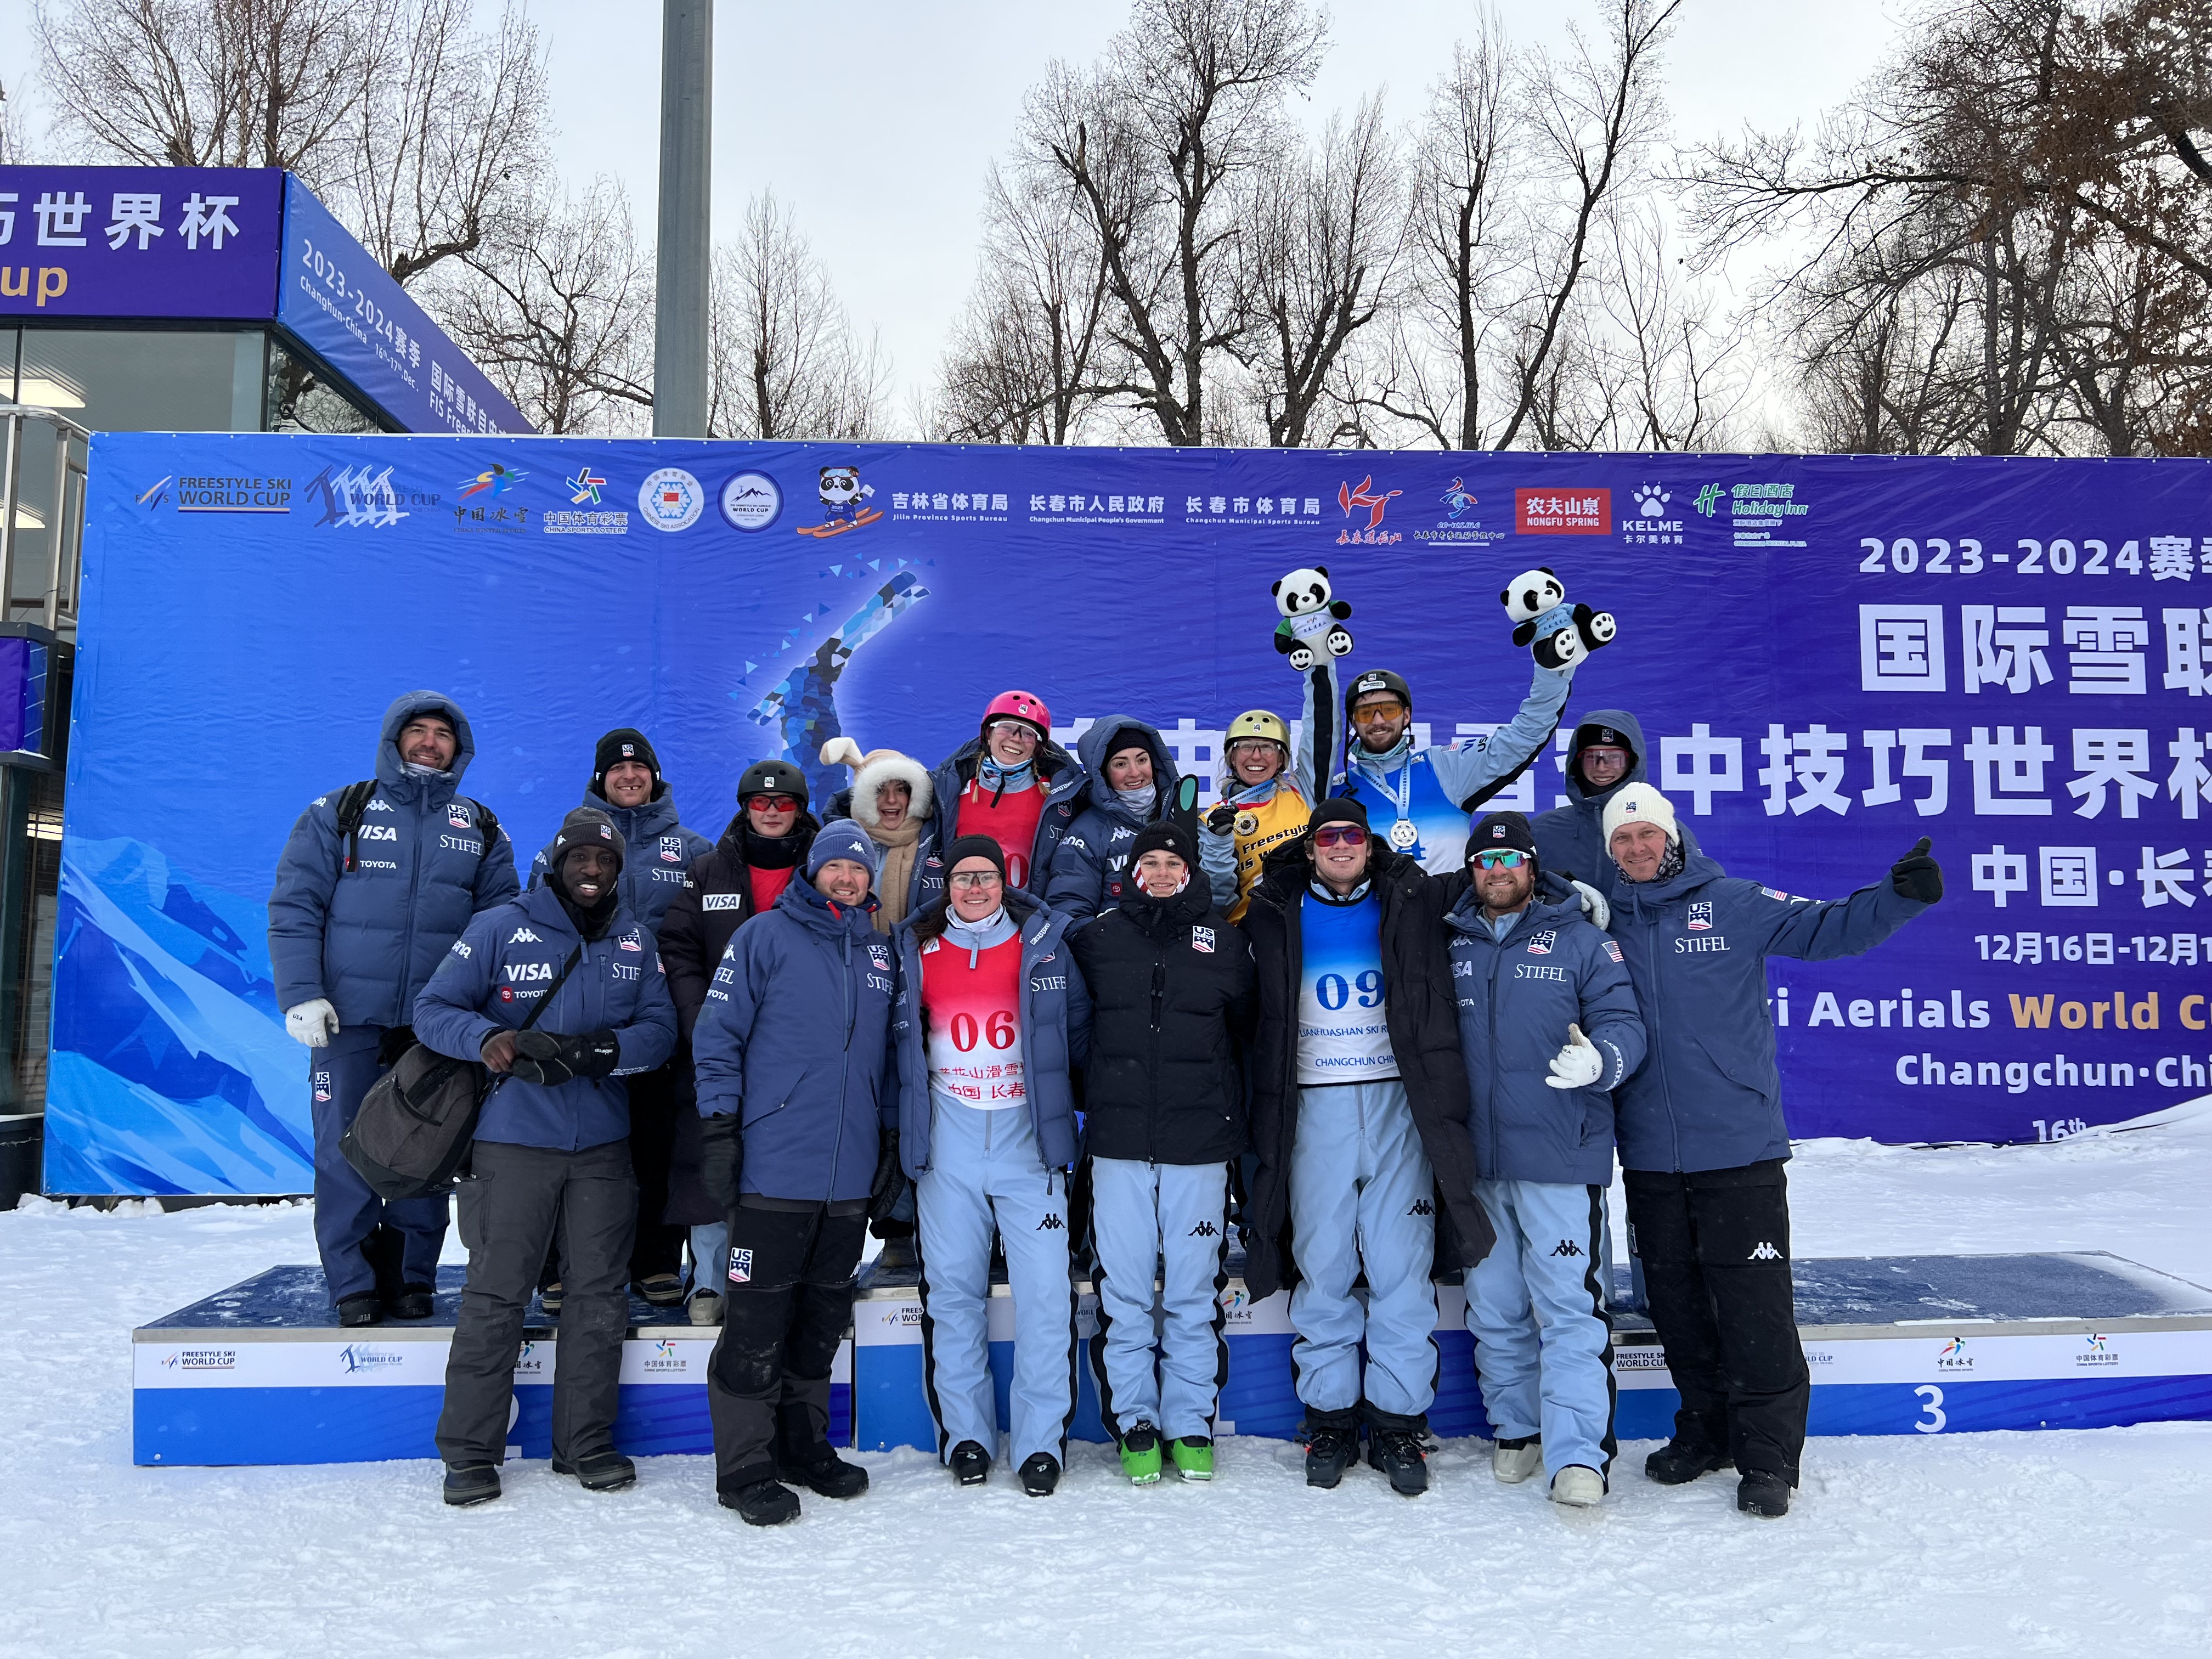 Stifel U.S. Freestyle Ski Team aerials athletes together on the podium after Winter Vinecki's win in Changchun